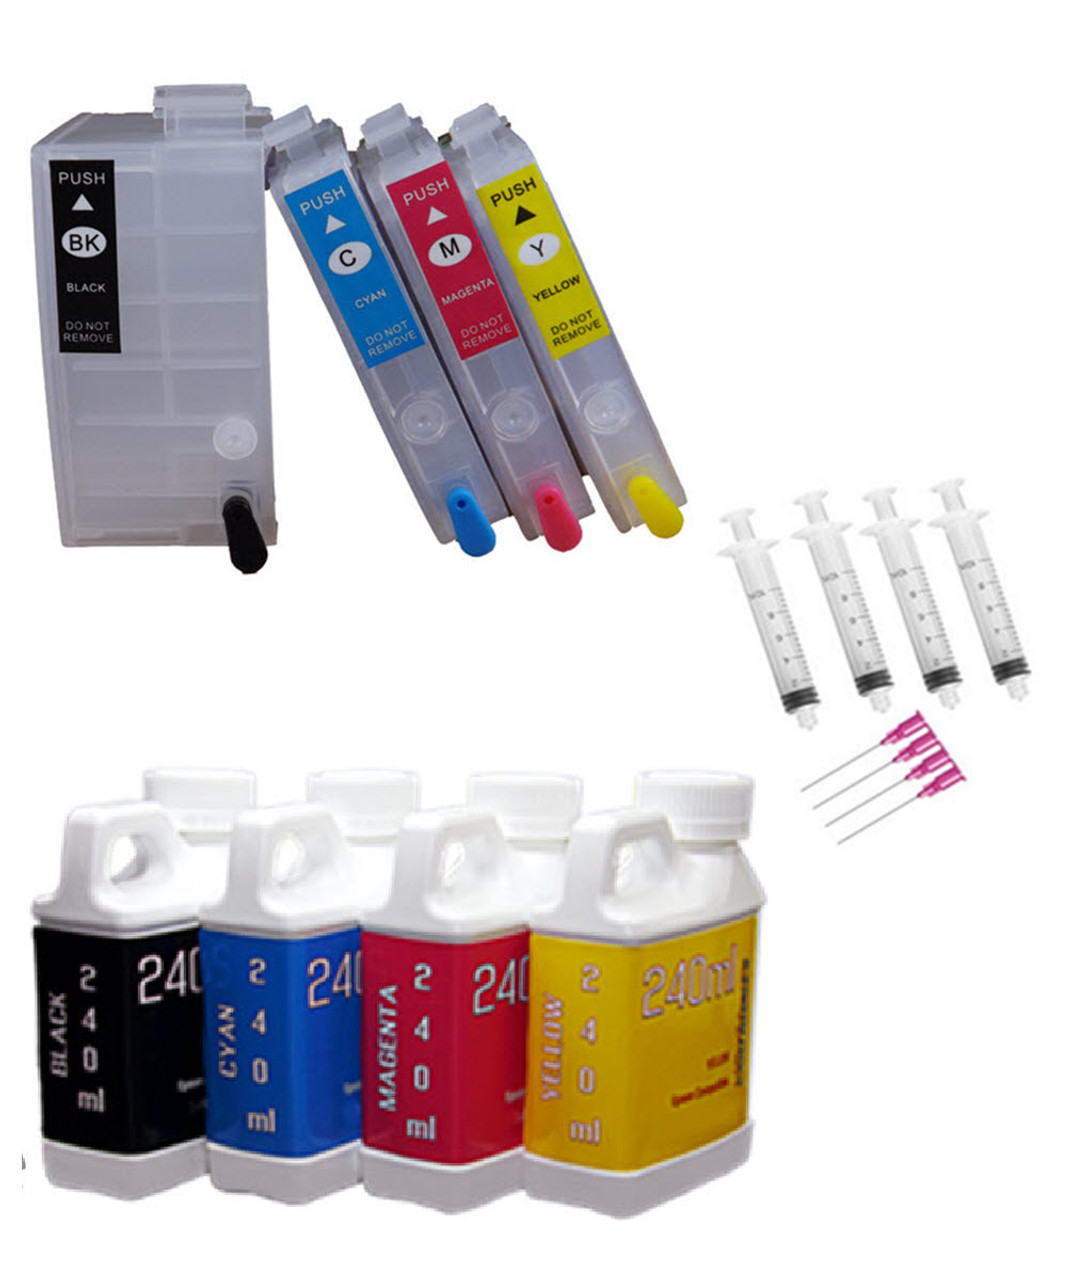 4 Refillable Ink Cartridges (empty) 4 240ml Dye Sublimation Ink Package for Epson WorkForce WF-7210, WorkForce WF-7710, WorkForce WF-7720 Printers